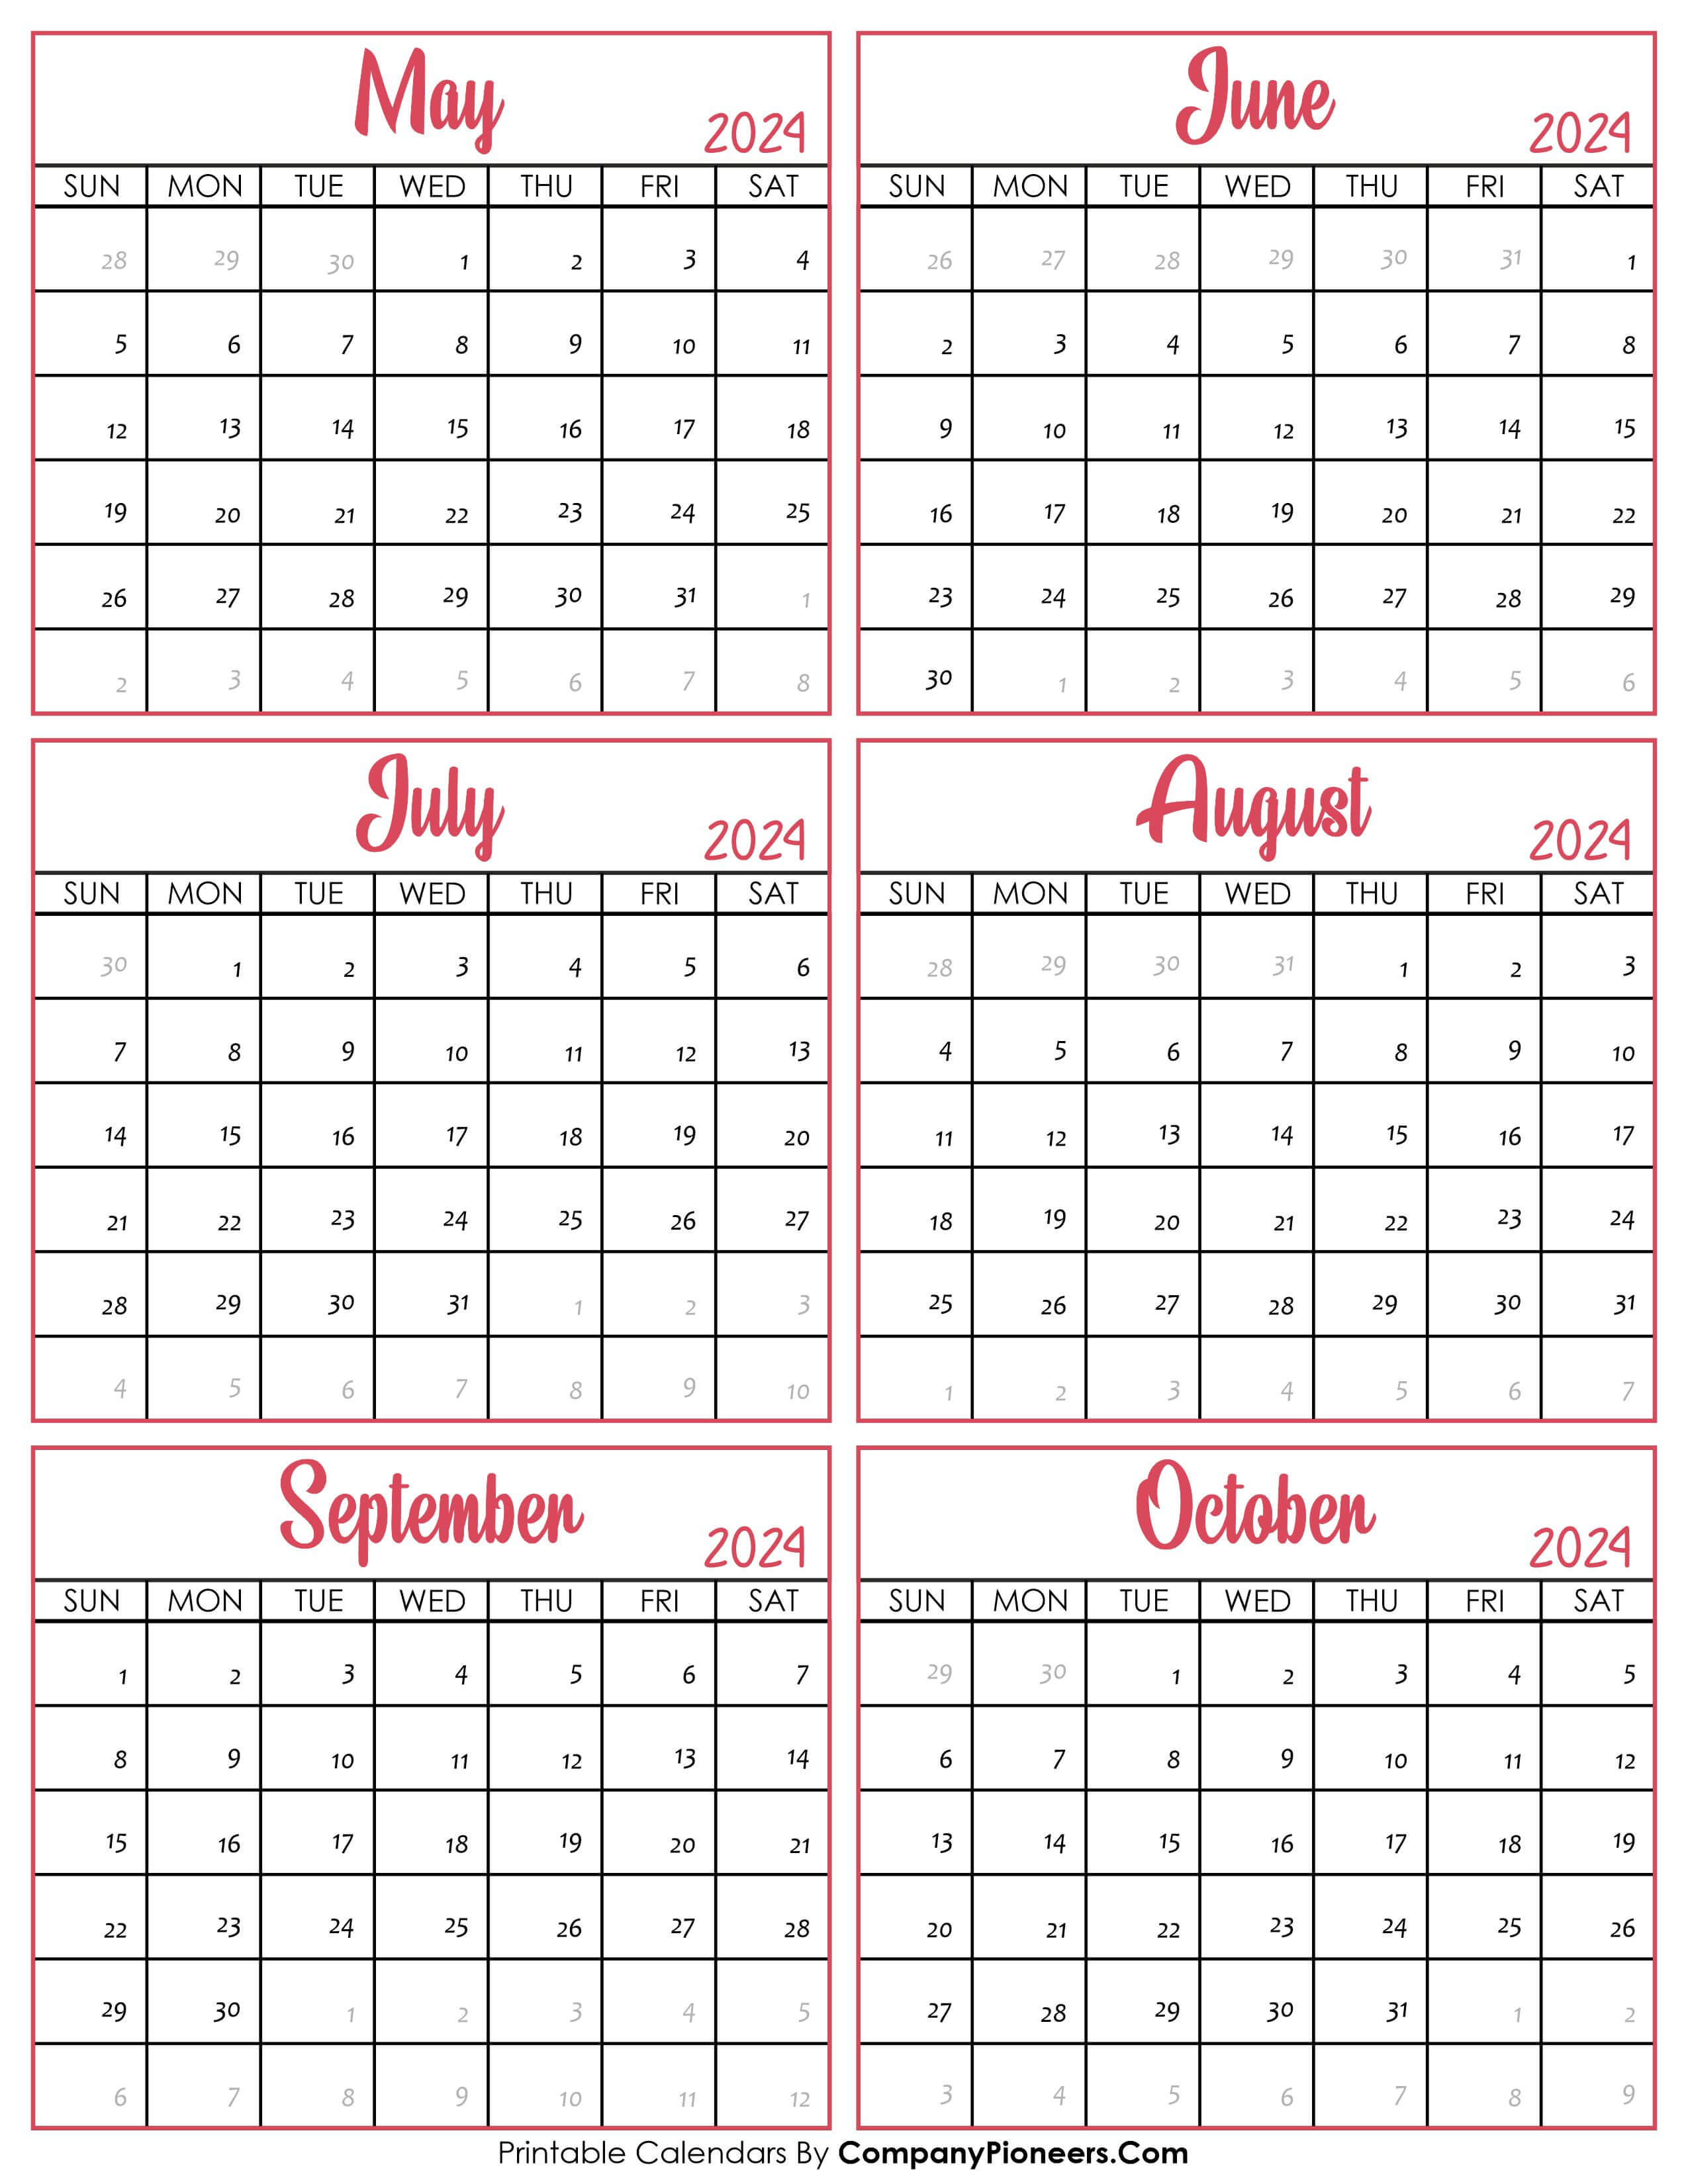 Calendar May to October 2024